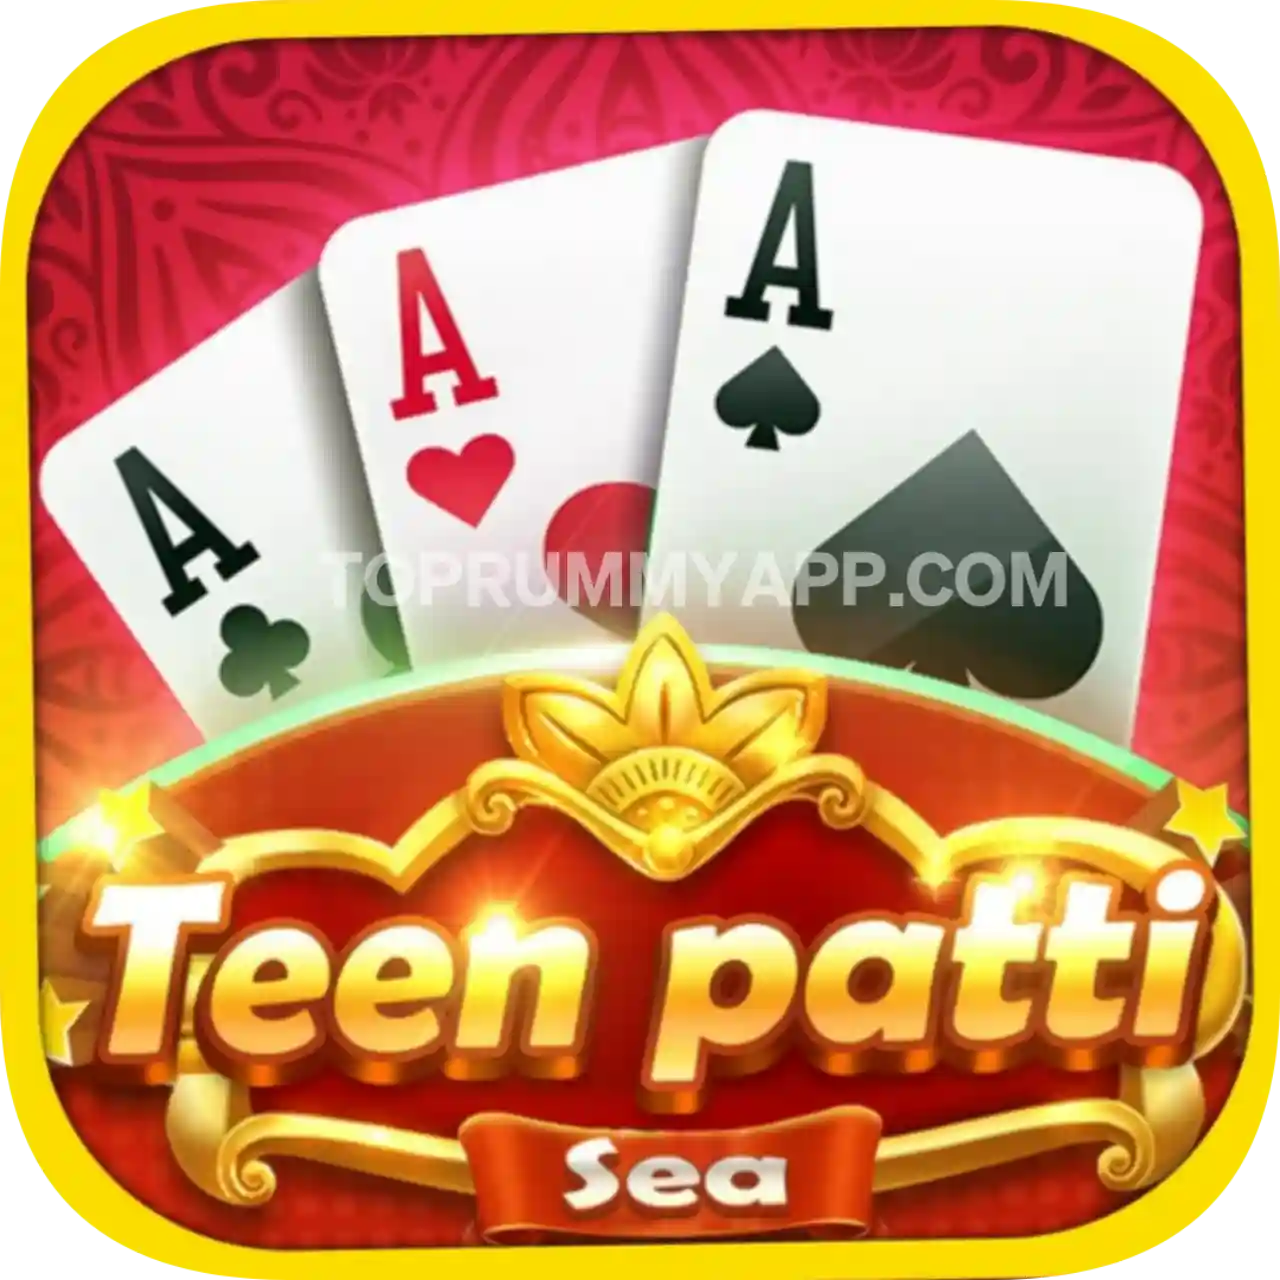 Teen Patti Sea Apk Download - All Car Roulette App List 51 Bonus